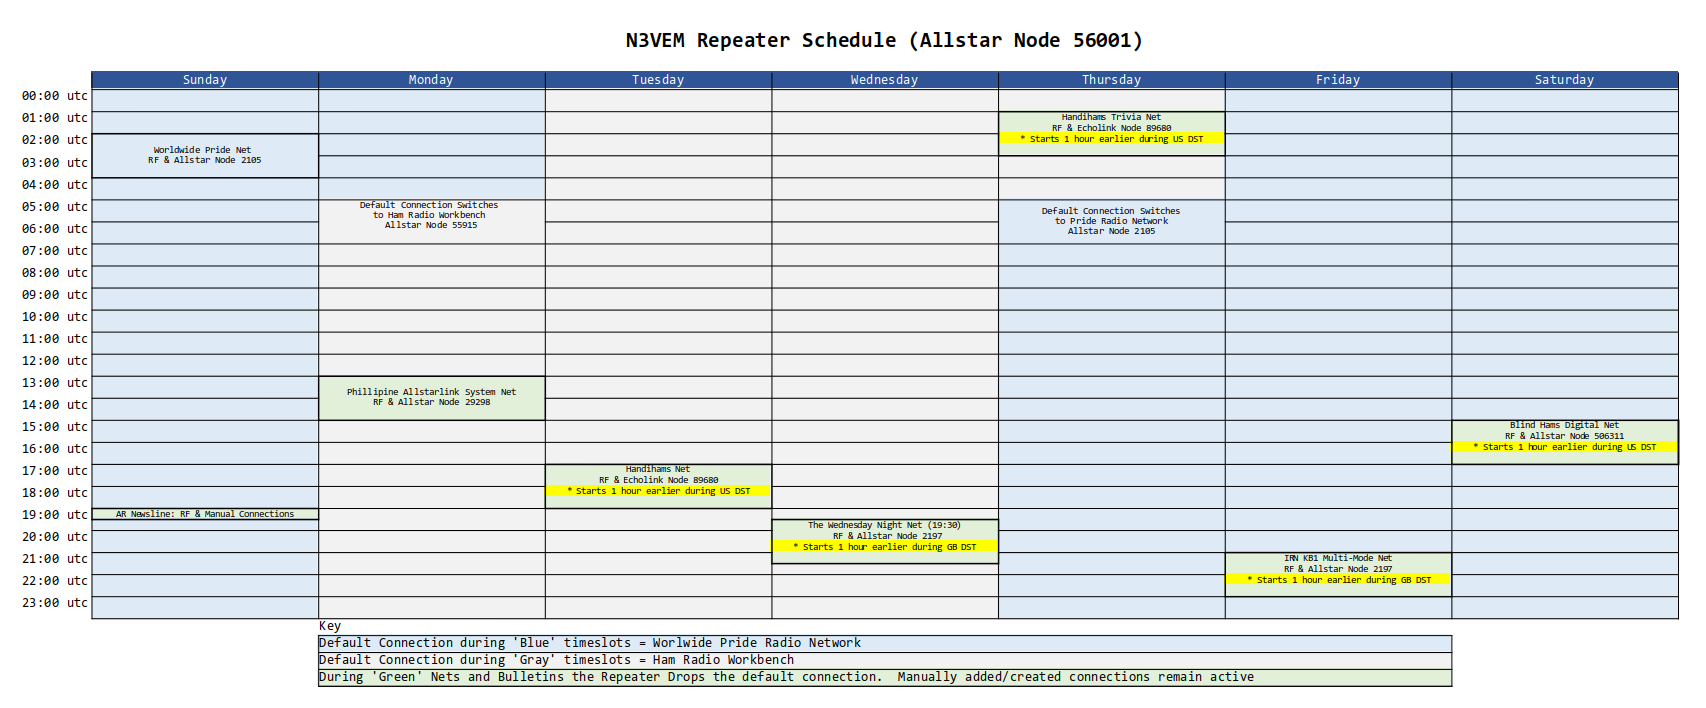 Calendar of Schedule. Text Version and Links Below image